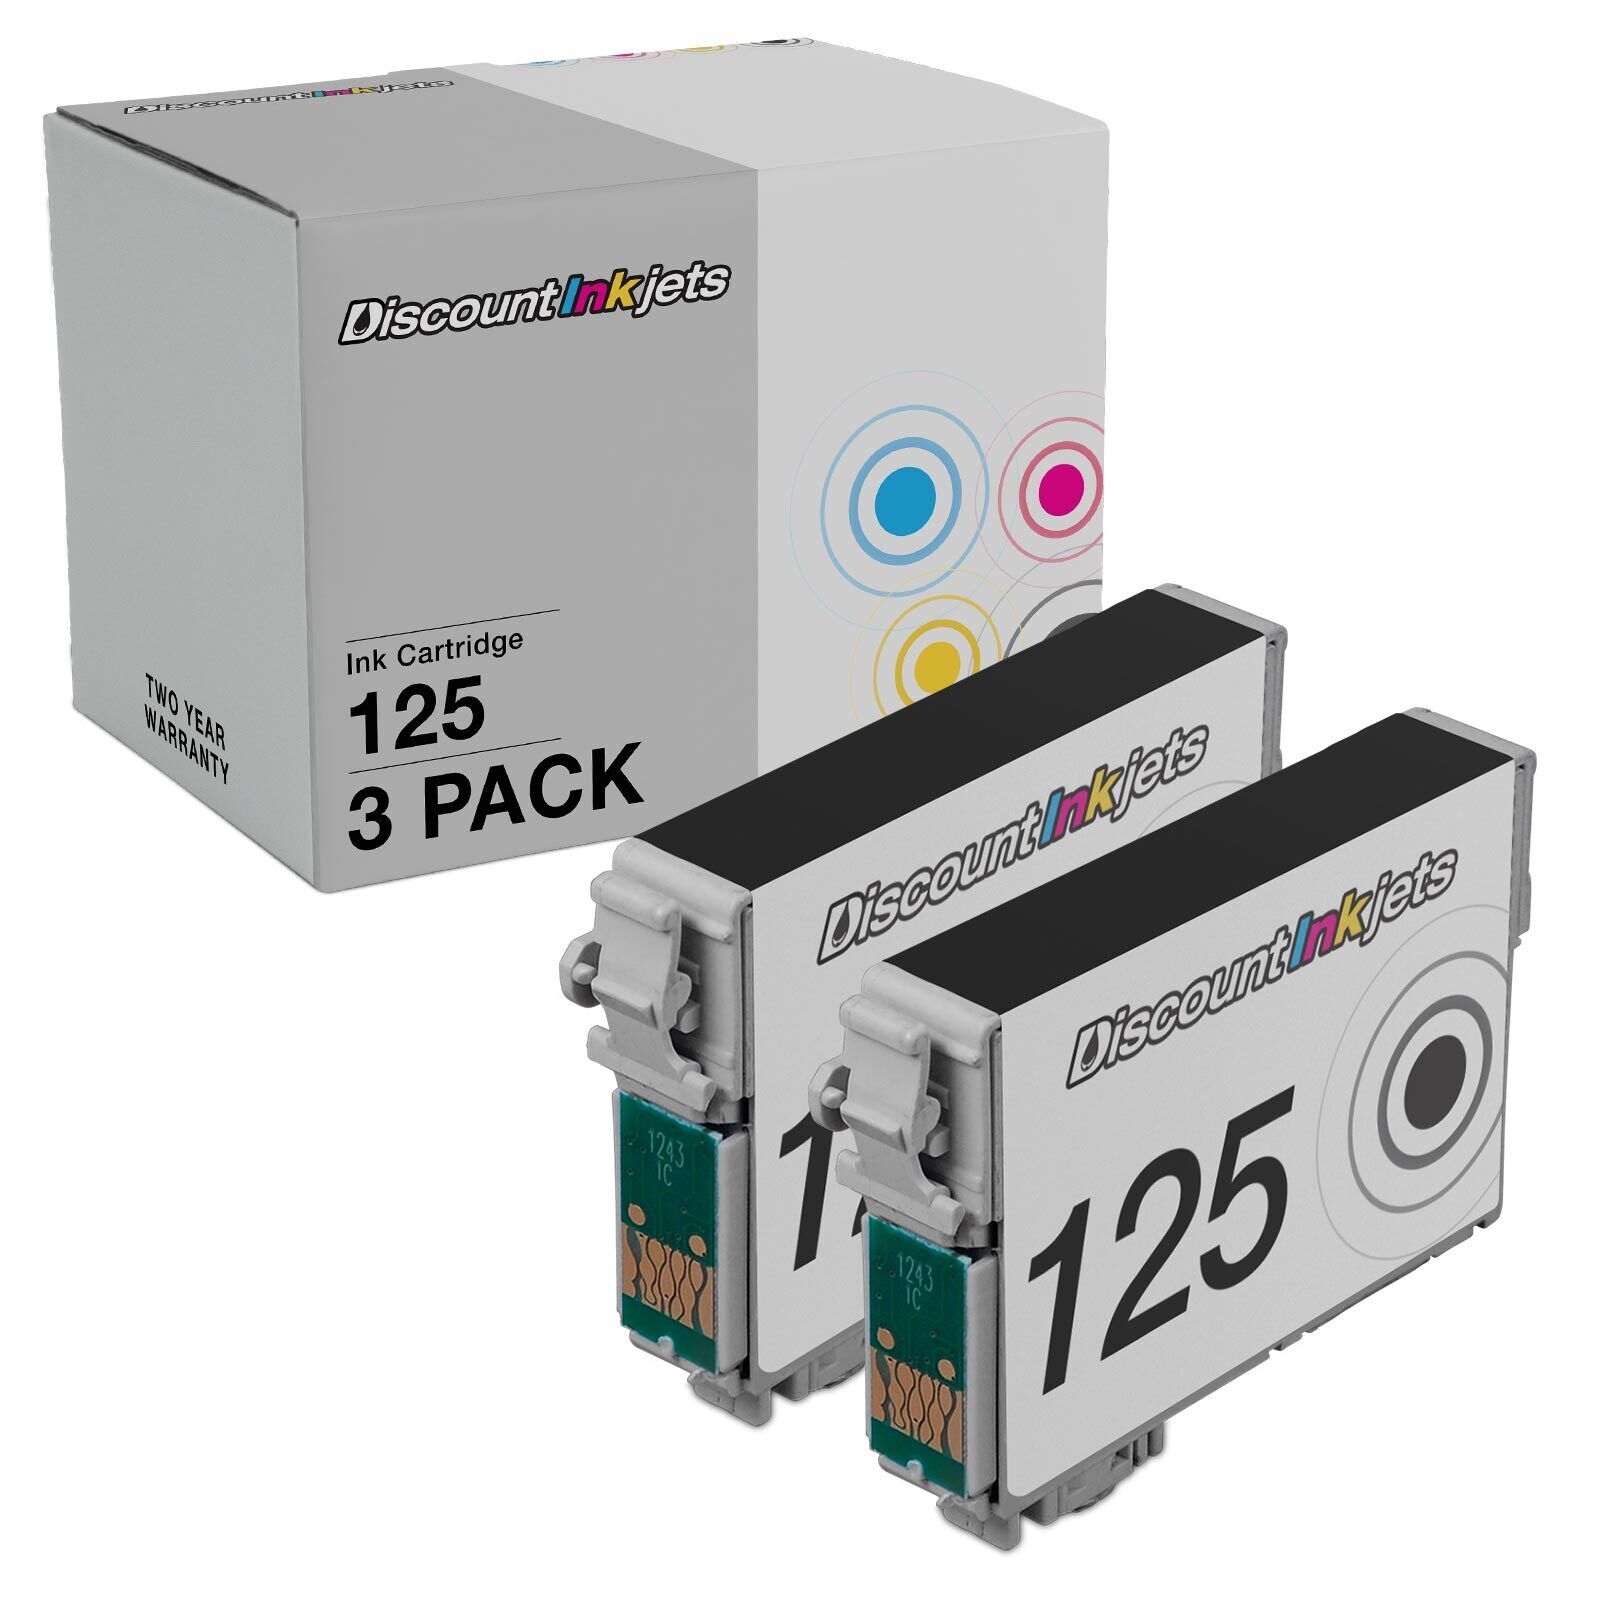 2 Pack T125120 125 T125 Black Printer Pigment Based Ink Cartridge for Epson